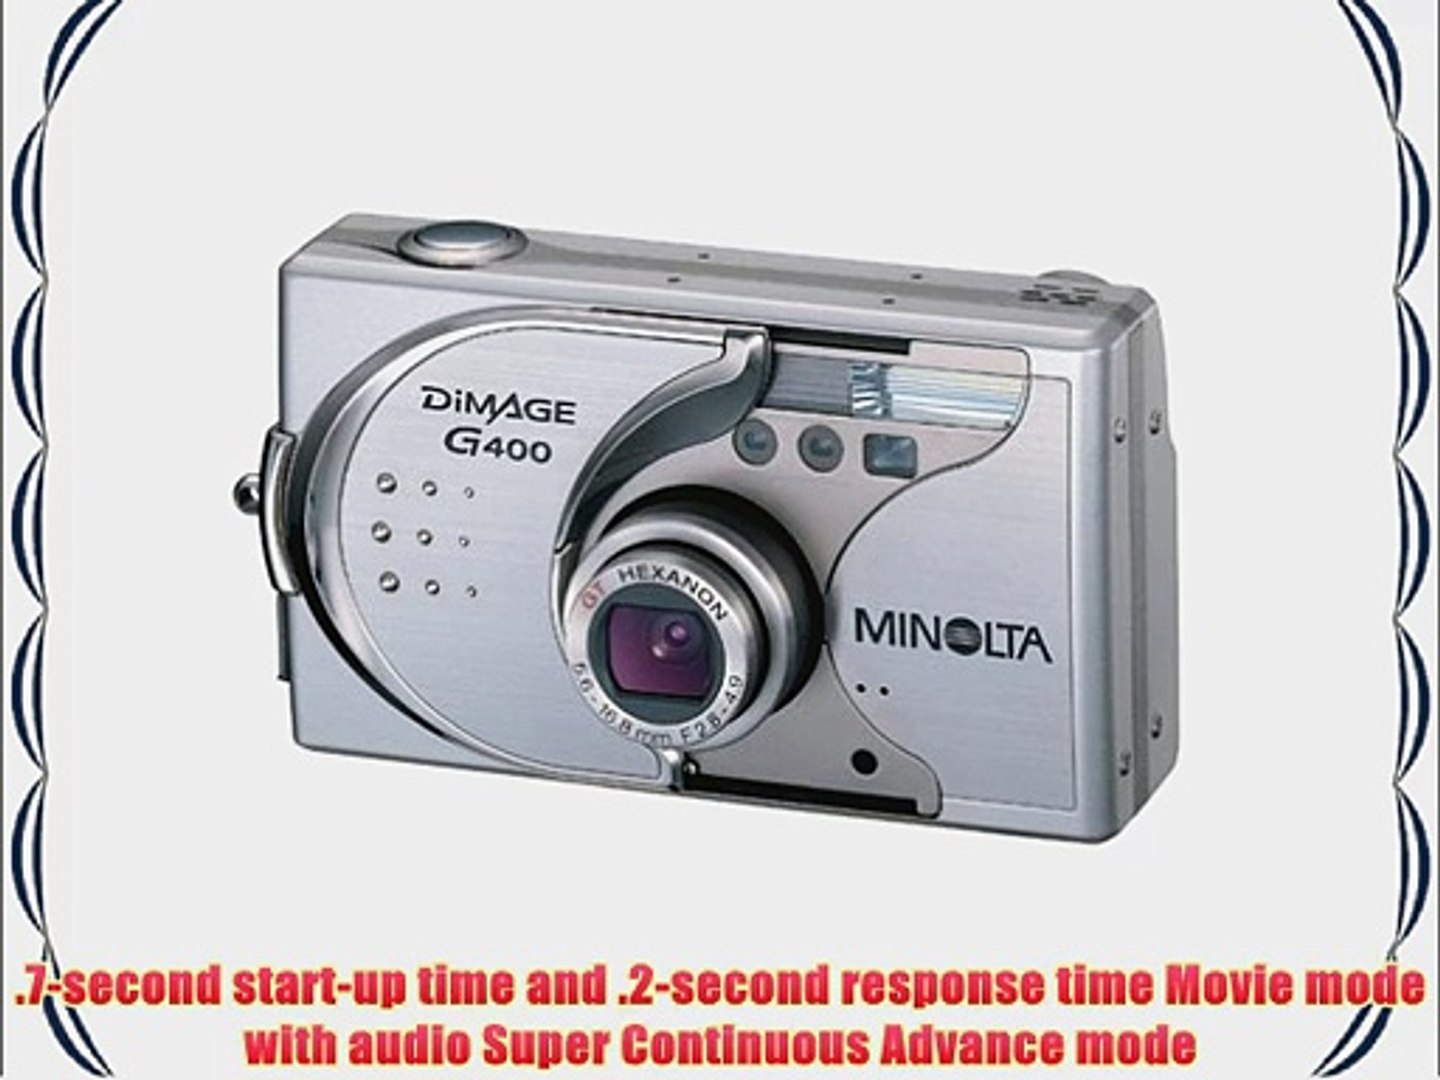 Minolta Dimage G400 4.0 MP Digital Camera with 3x Optical